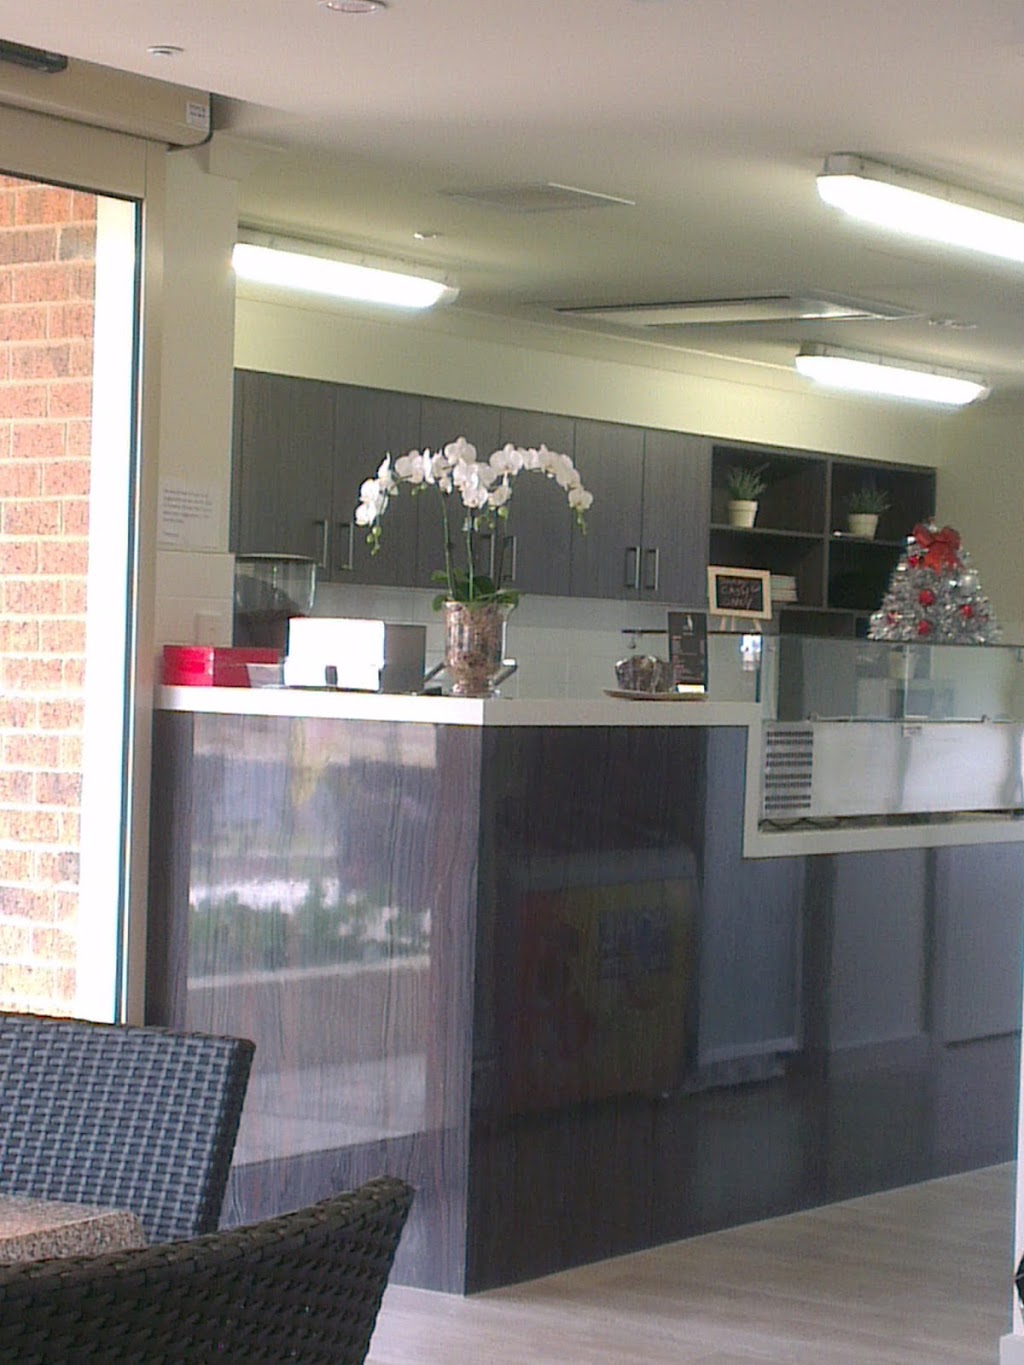 Cockatoo Cafe | cafe | 15 Buffalo Cres, Wyndham Vale VIC 3024, Australia | 0405408629 OR +61 405 408 629